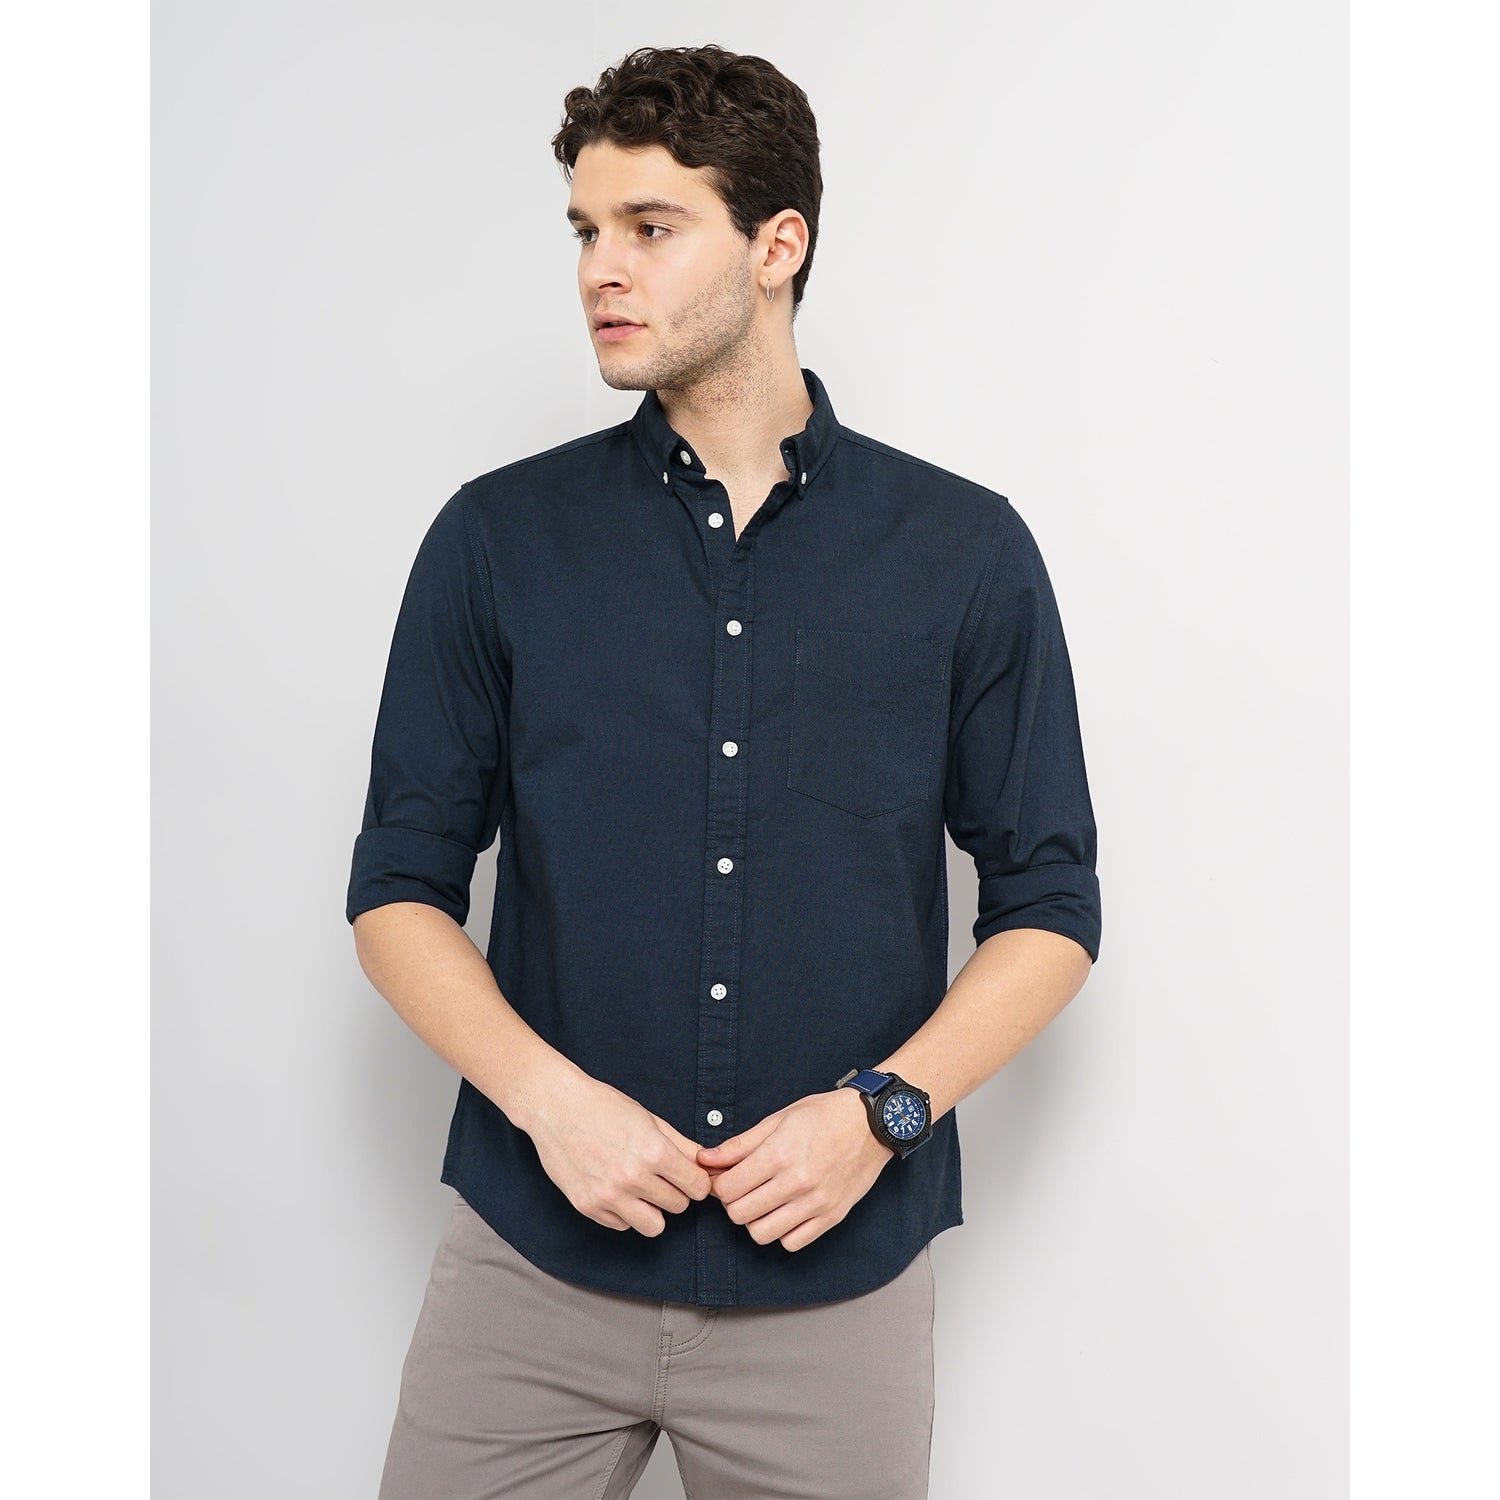 Men Navy Blue Solid Regular Fit Cotton Hi Stake Social Oxford Casual Shirt (DAXFORD1)